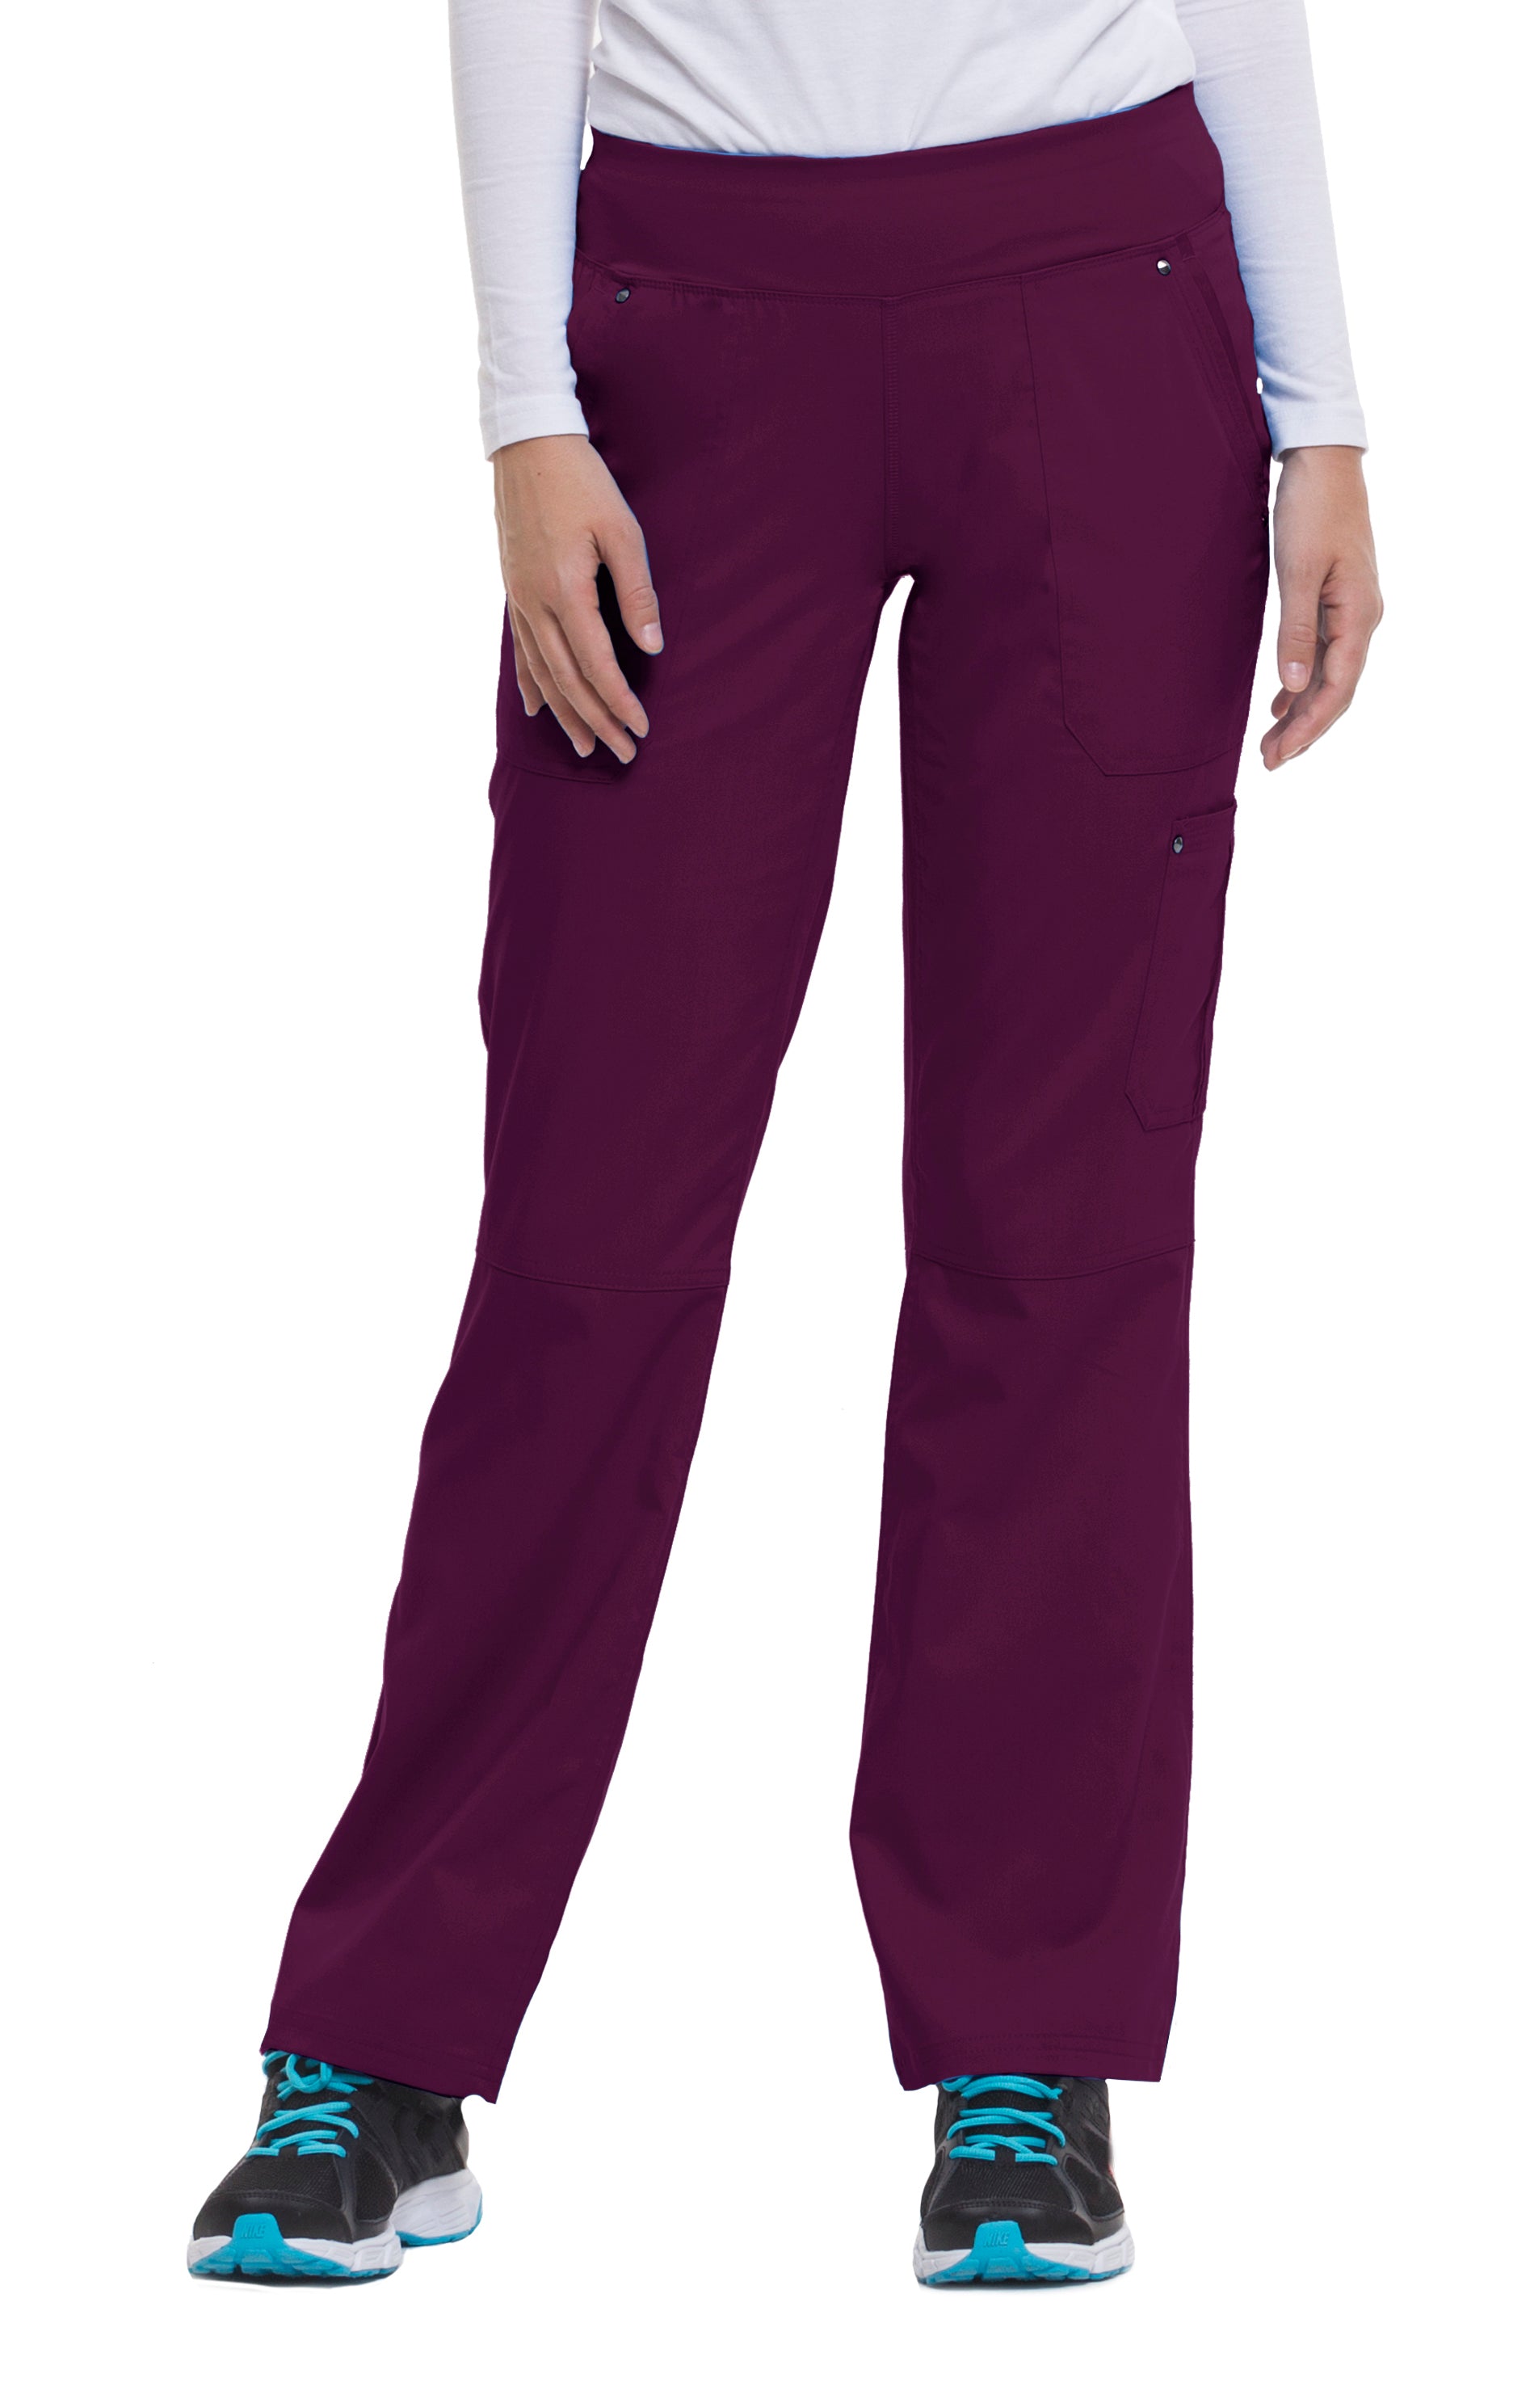 Healing Hands Purple Label YOGA 9133 Tall Tori Pant – The Uniform